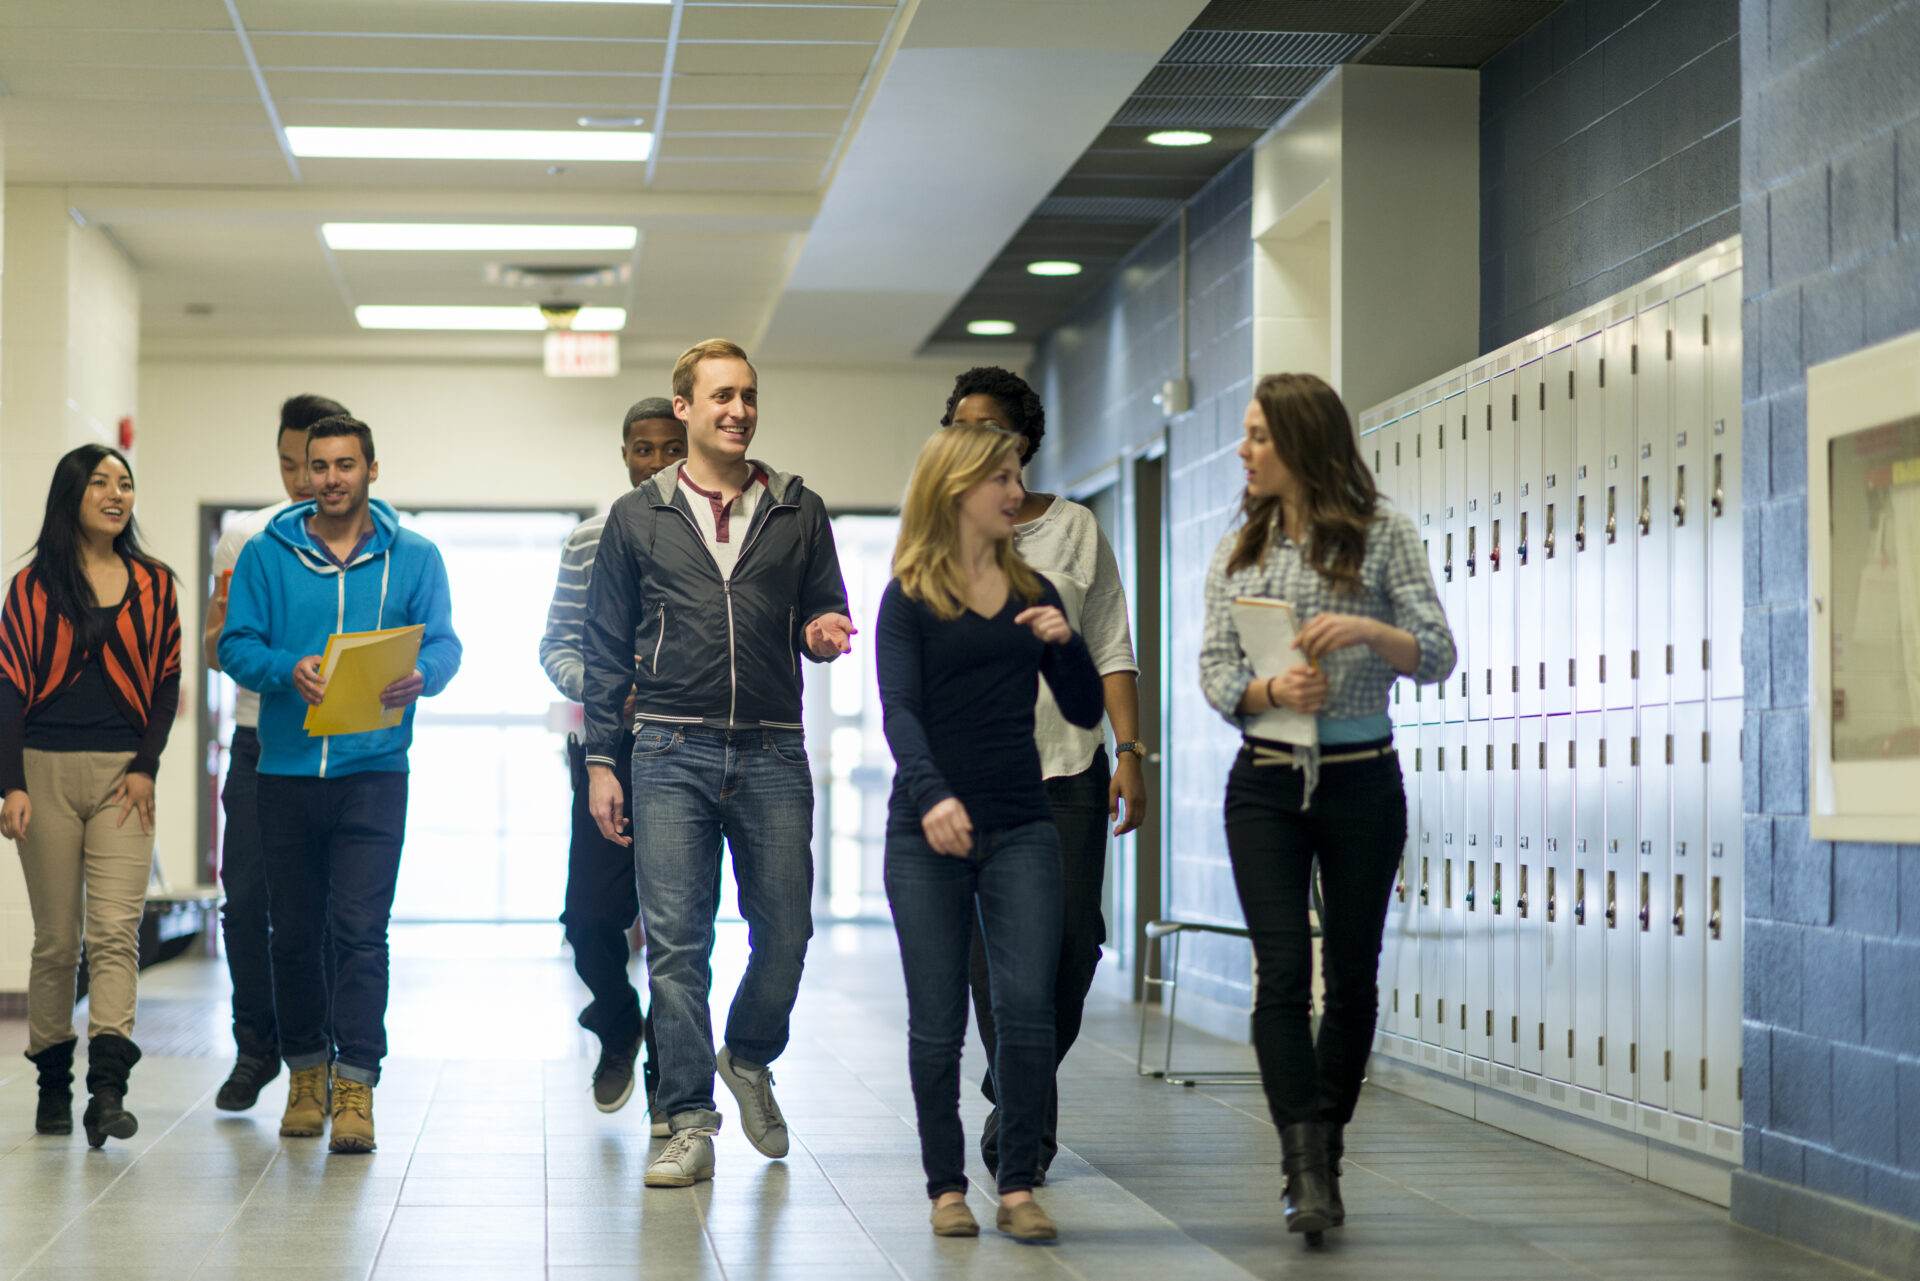 Students in a school hallway